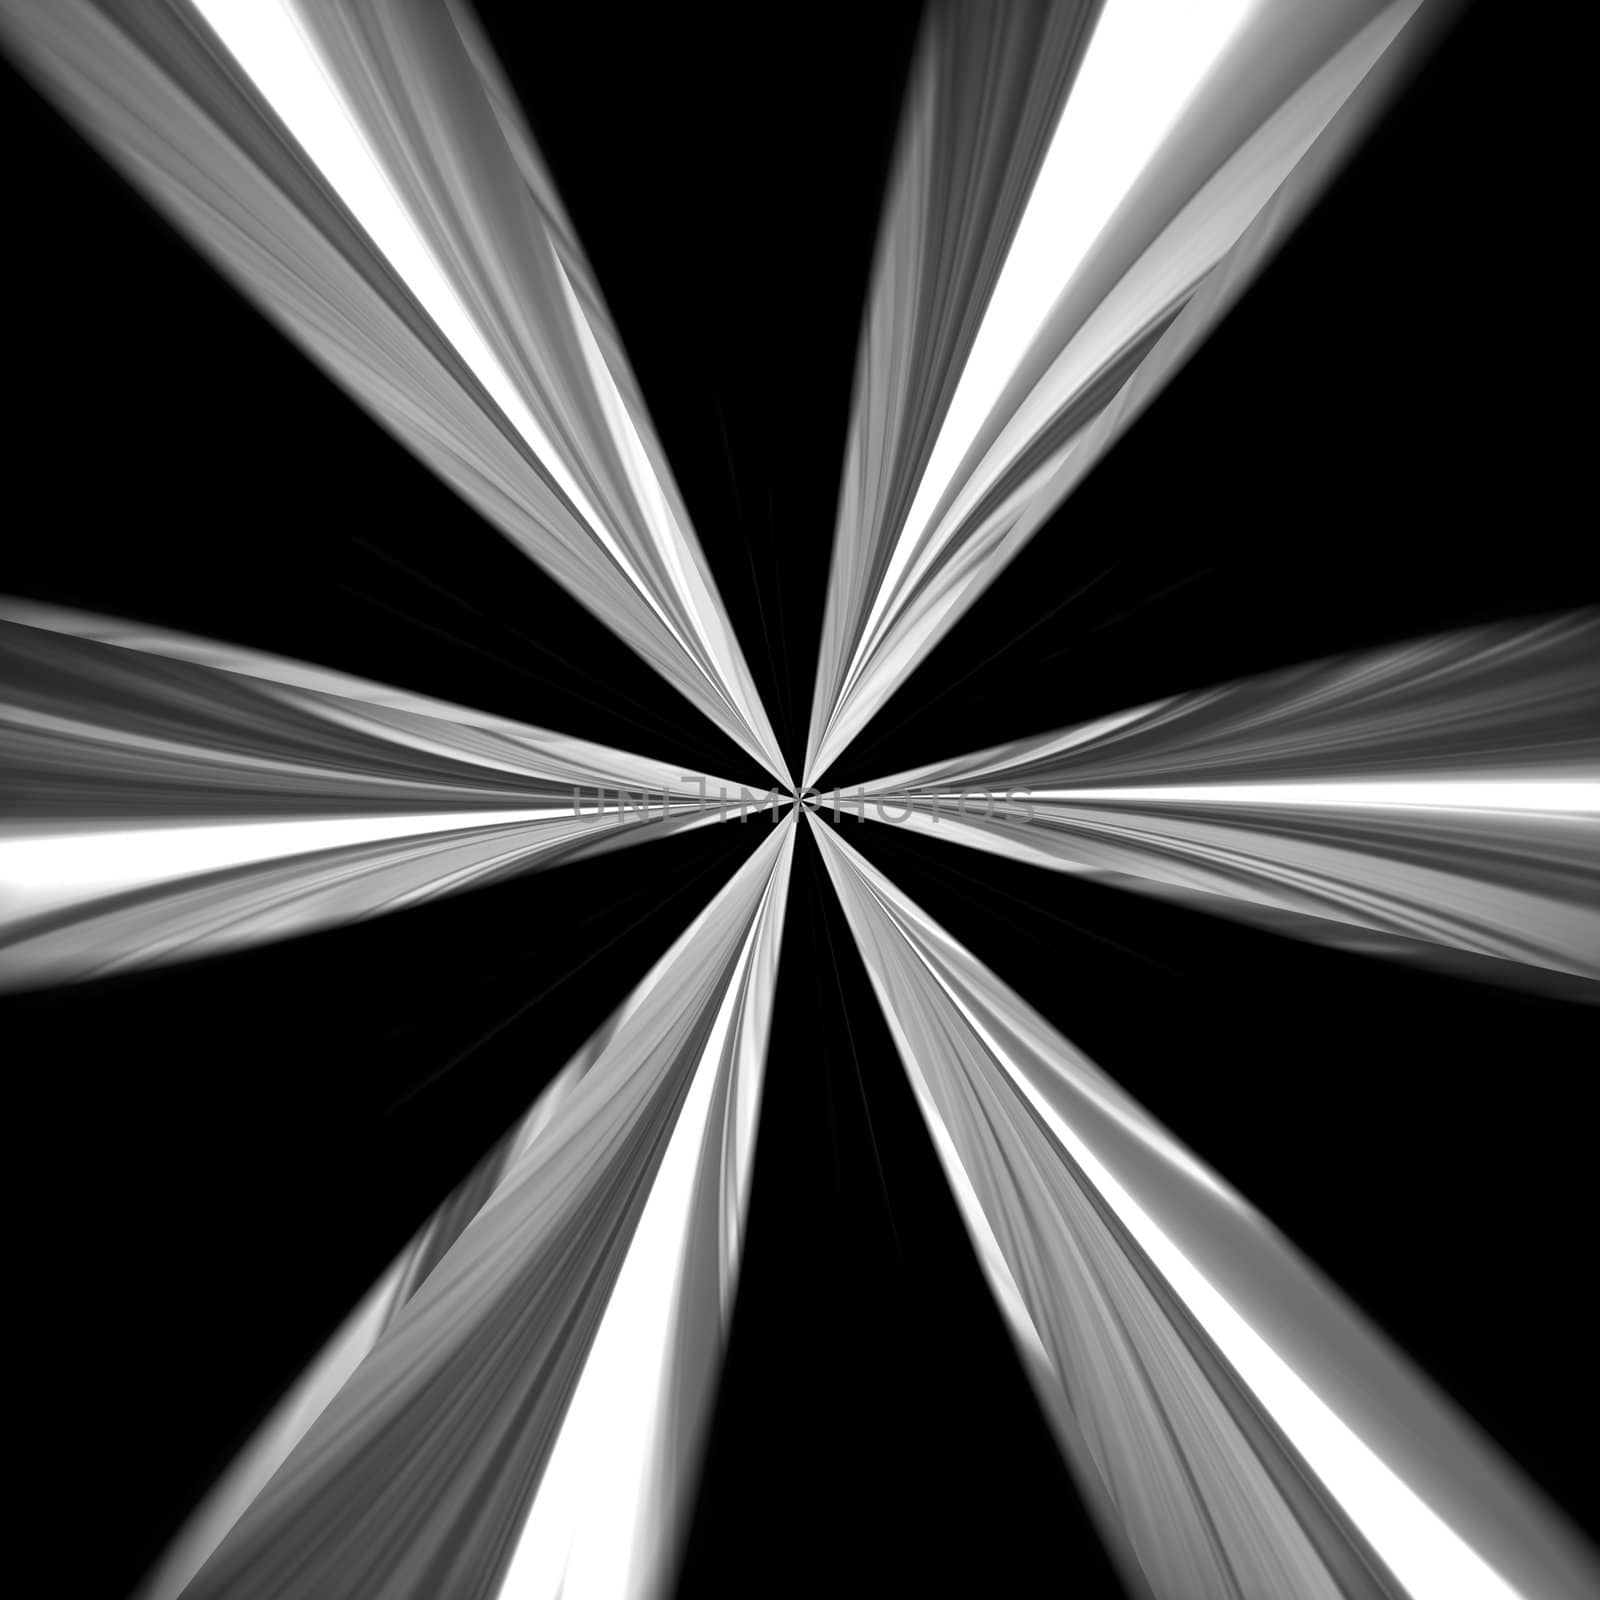 Shiny chrome vortex radiating isolated over a black background.